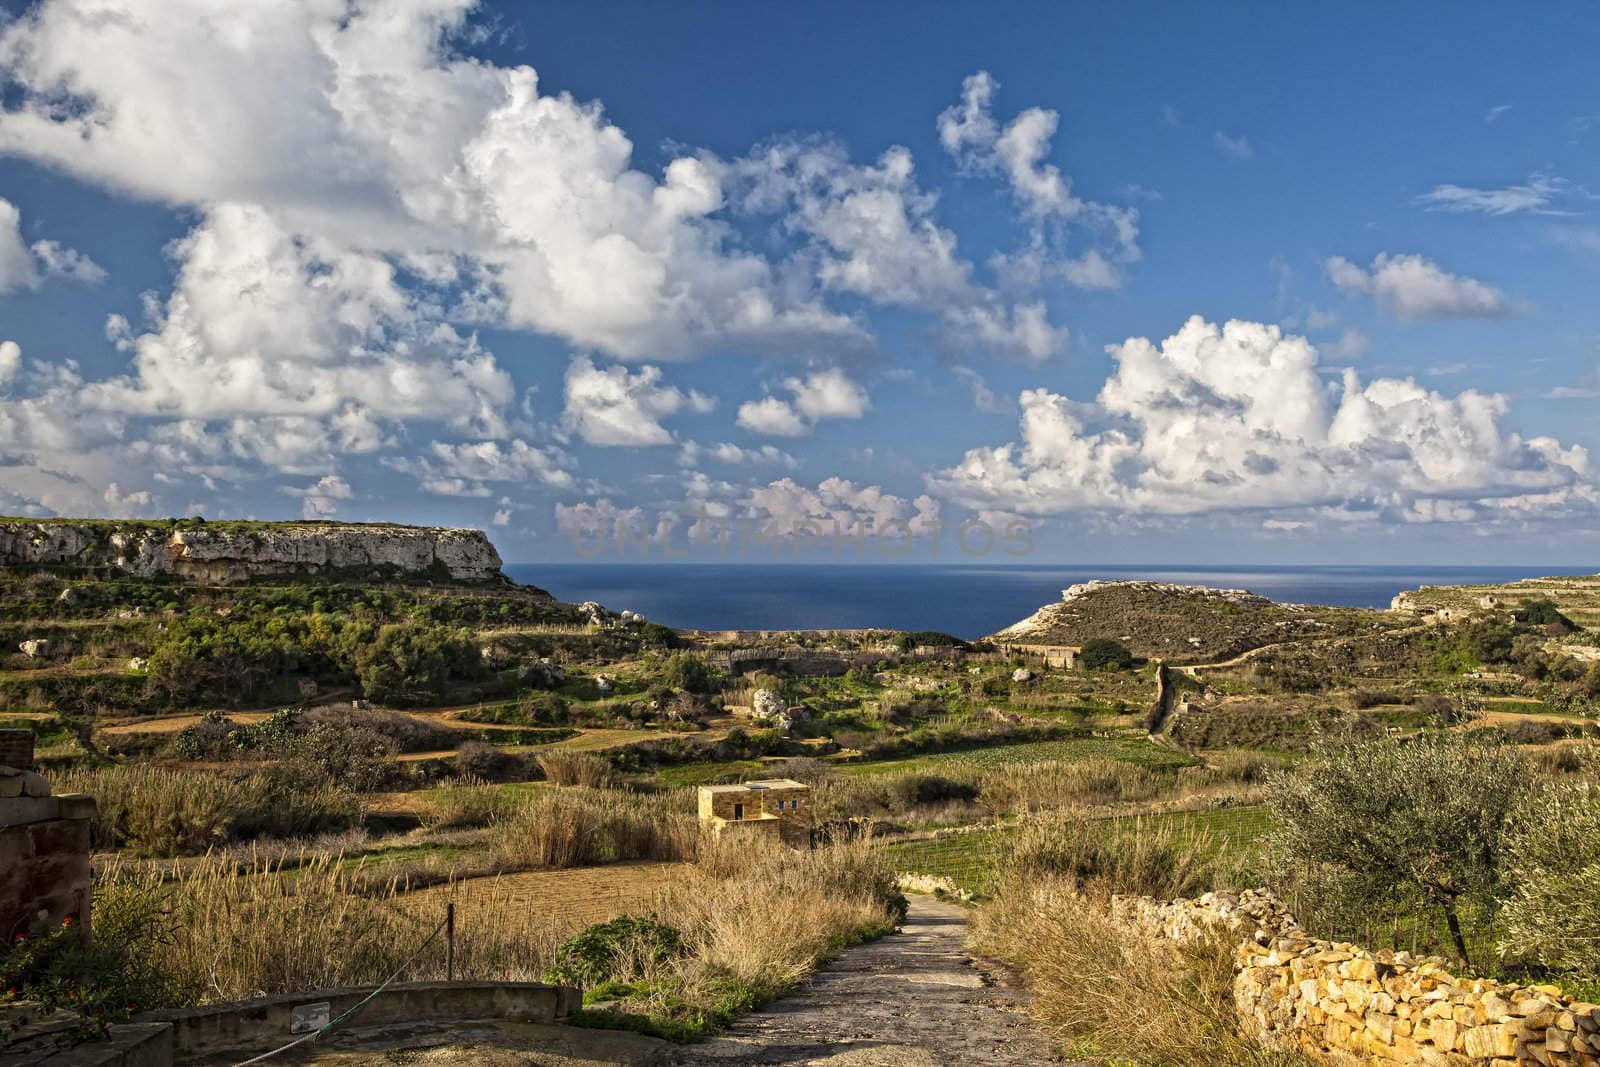 Beautiful landscape and scenery at Bahrija in Malta